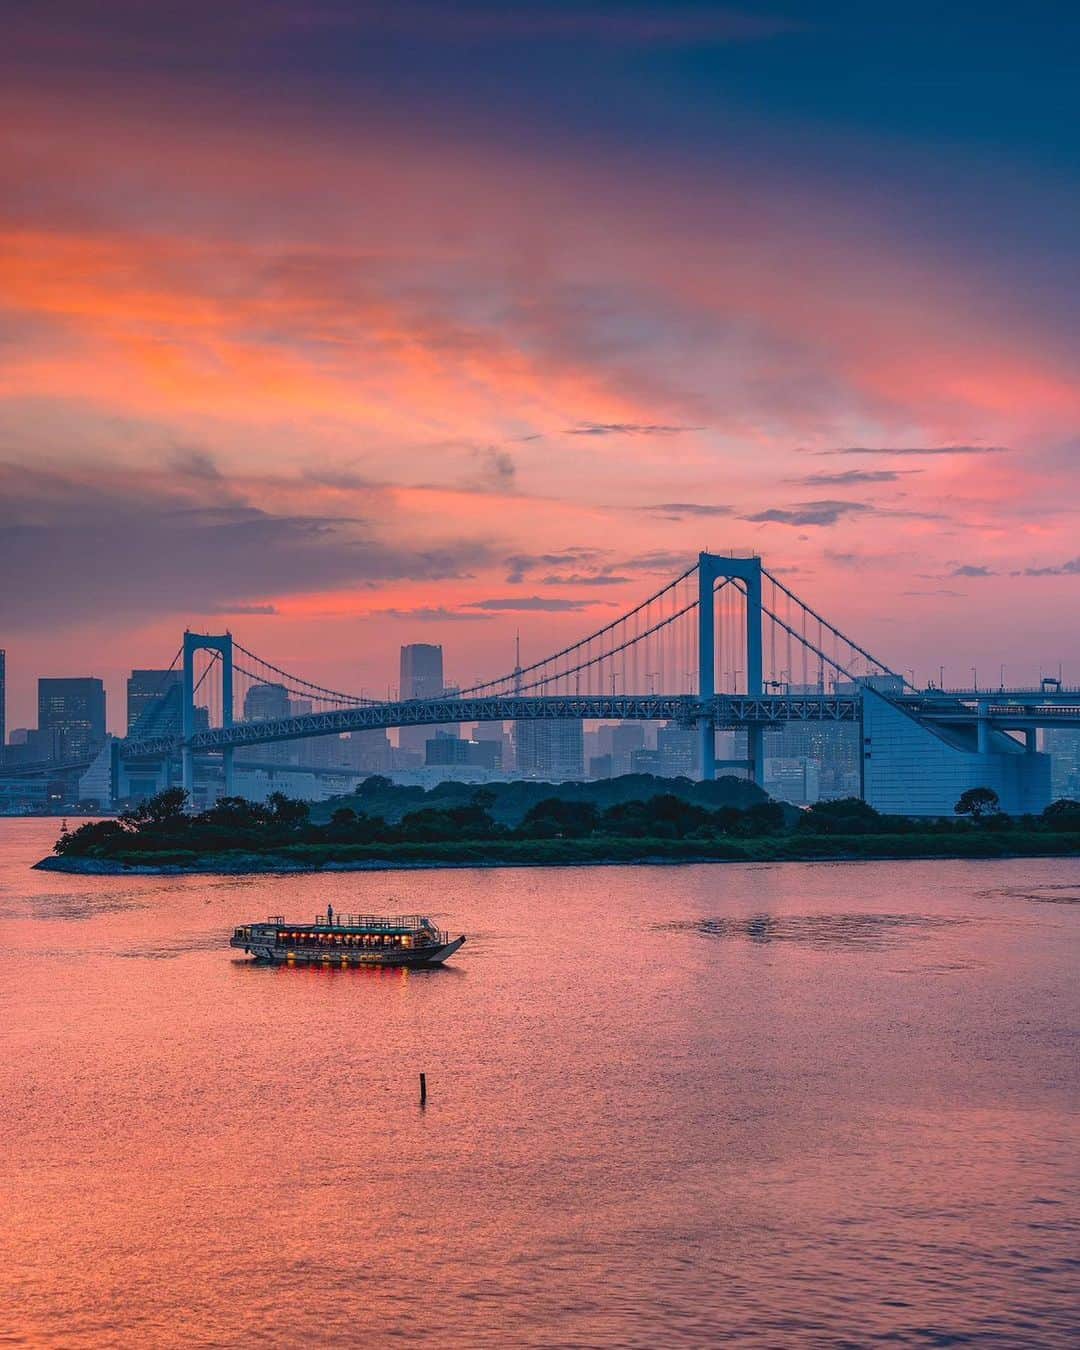 Promoting Tokyo Culture都庁文化振興部のインスタグラム：「The shifting sky at dusk is a captivating sight at Tokyo Bay 📷 As the sun dips, the crimson hues morph into soft purples, creating a beautiful Tokyo night vista.  -  刻一刻と変わる夕暮れ時の空が美しい、東京湾岸からの風景📷 赤く染まった空と海は、やがて淡い紫色へと変化し、陽が落ちると東京らしい夜景が姿を表します。  #tokyoartsandculture 📸: @memolee_official  #tokyobay #rainbowbridge #東京湾 #レインボーブリッジ #tokyotrip #tokyostreet #tokyophotography #tokyojapan  #tokyotokyo #culturetrip #explorejpn #japan_of_insta #japan_art_photography #japan_great_view #theculturetrip #japantrip #bestphoto_japan #thestreetphotographyhub  #nipponpic #japan_photo_now #tokyolife #discoverjapan #japanfocus #japanesestyle #unknownjapan #streetclassics #timeless_streets  #streetsnap #artphoto」